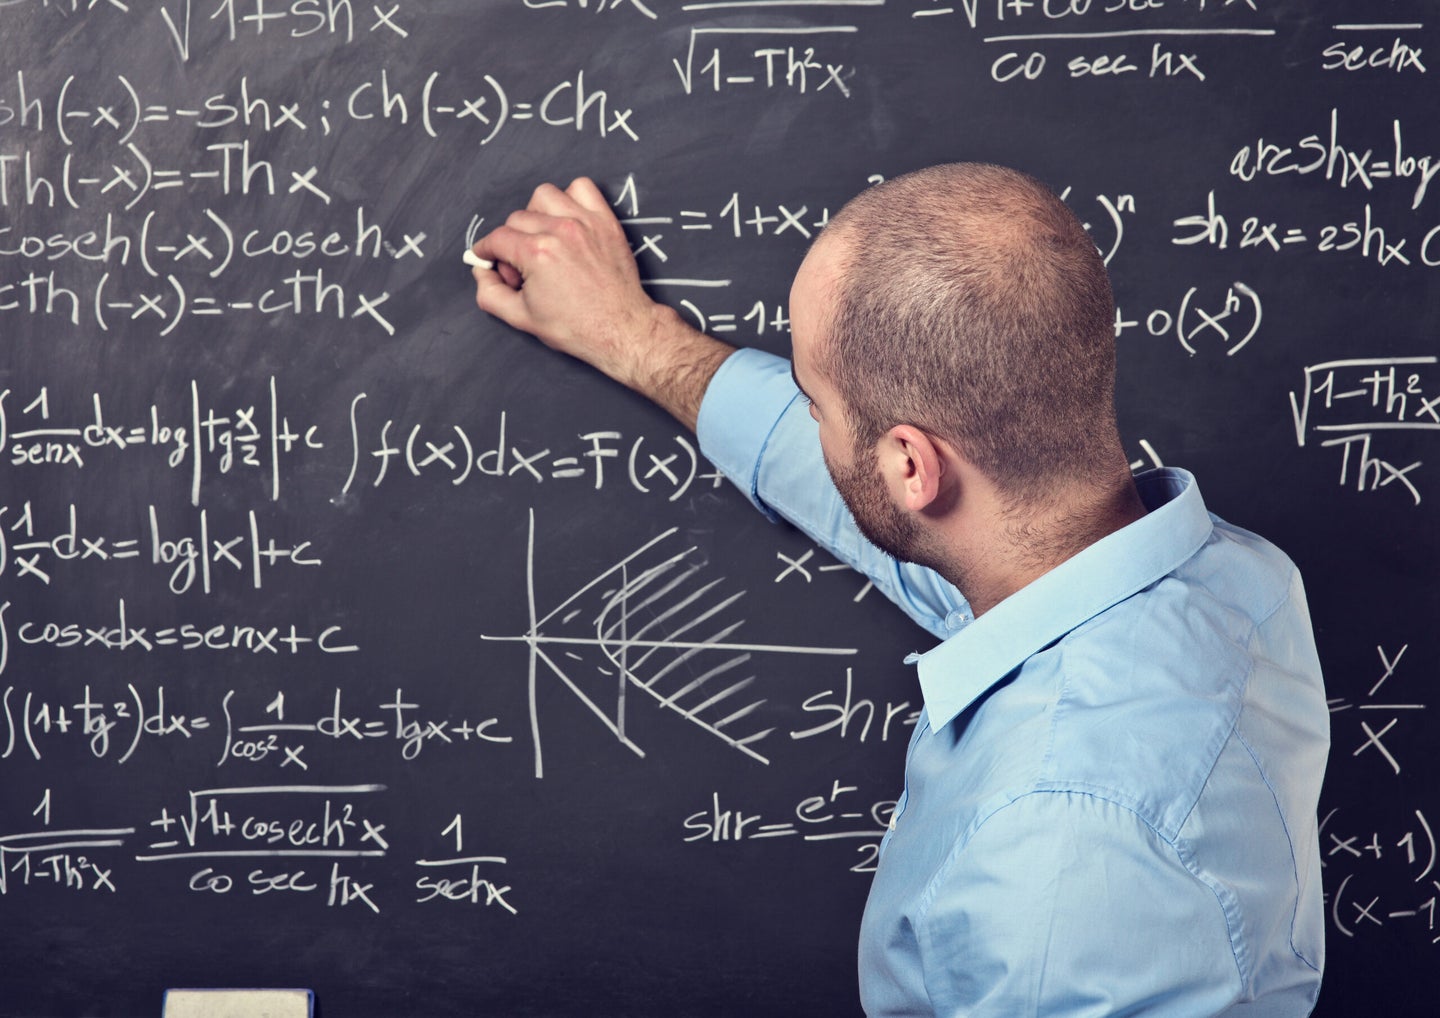 Man in blue shirt writing math onto a black chalk board.